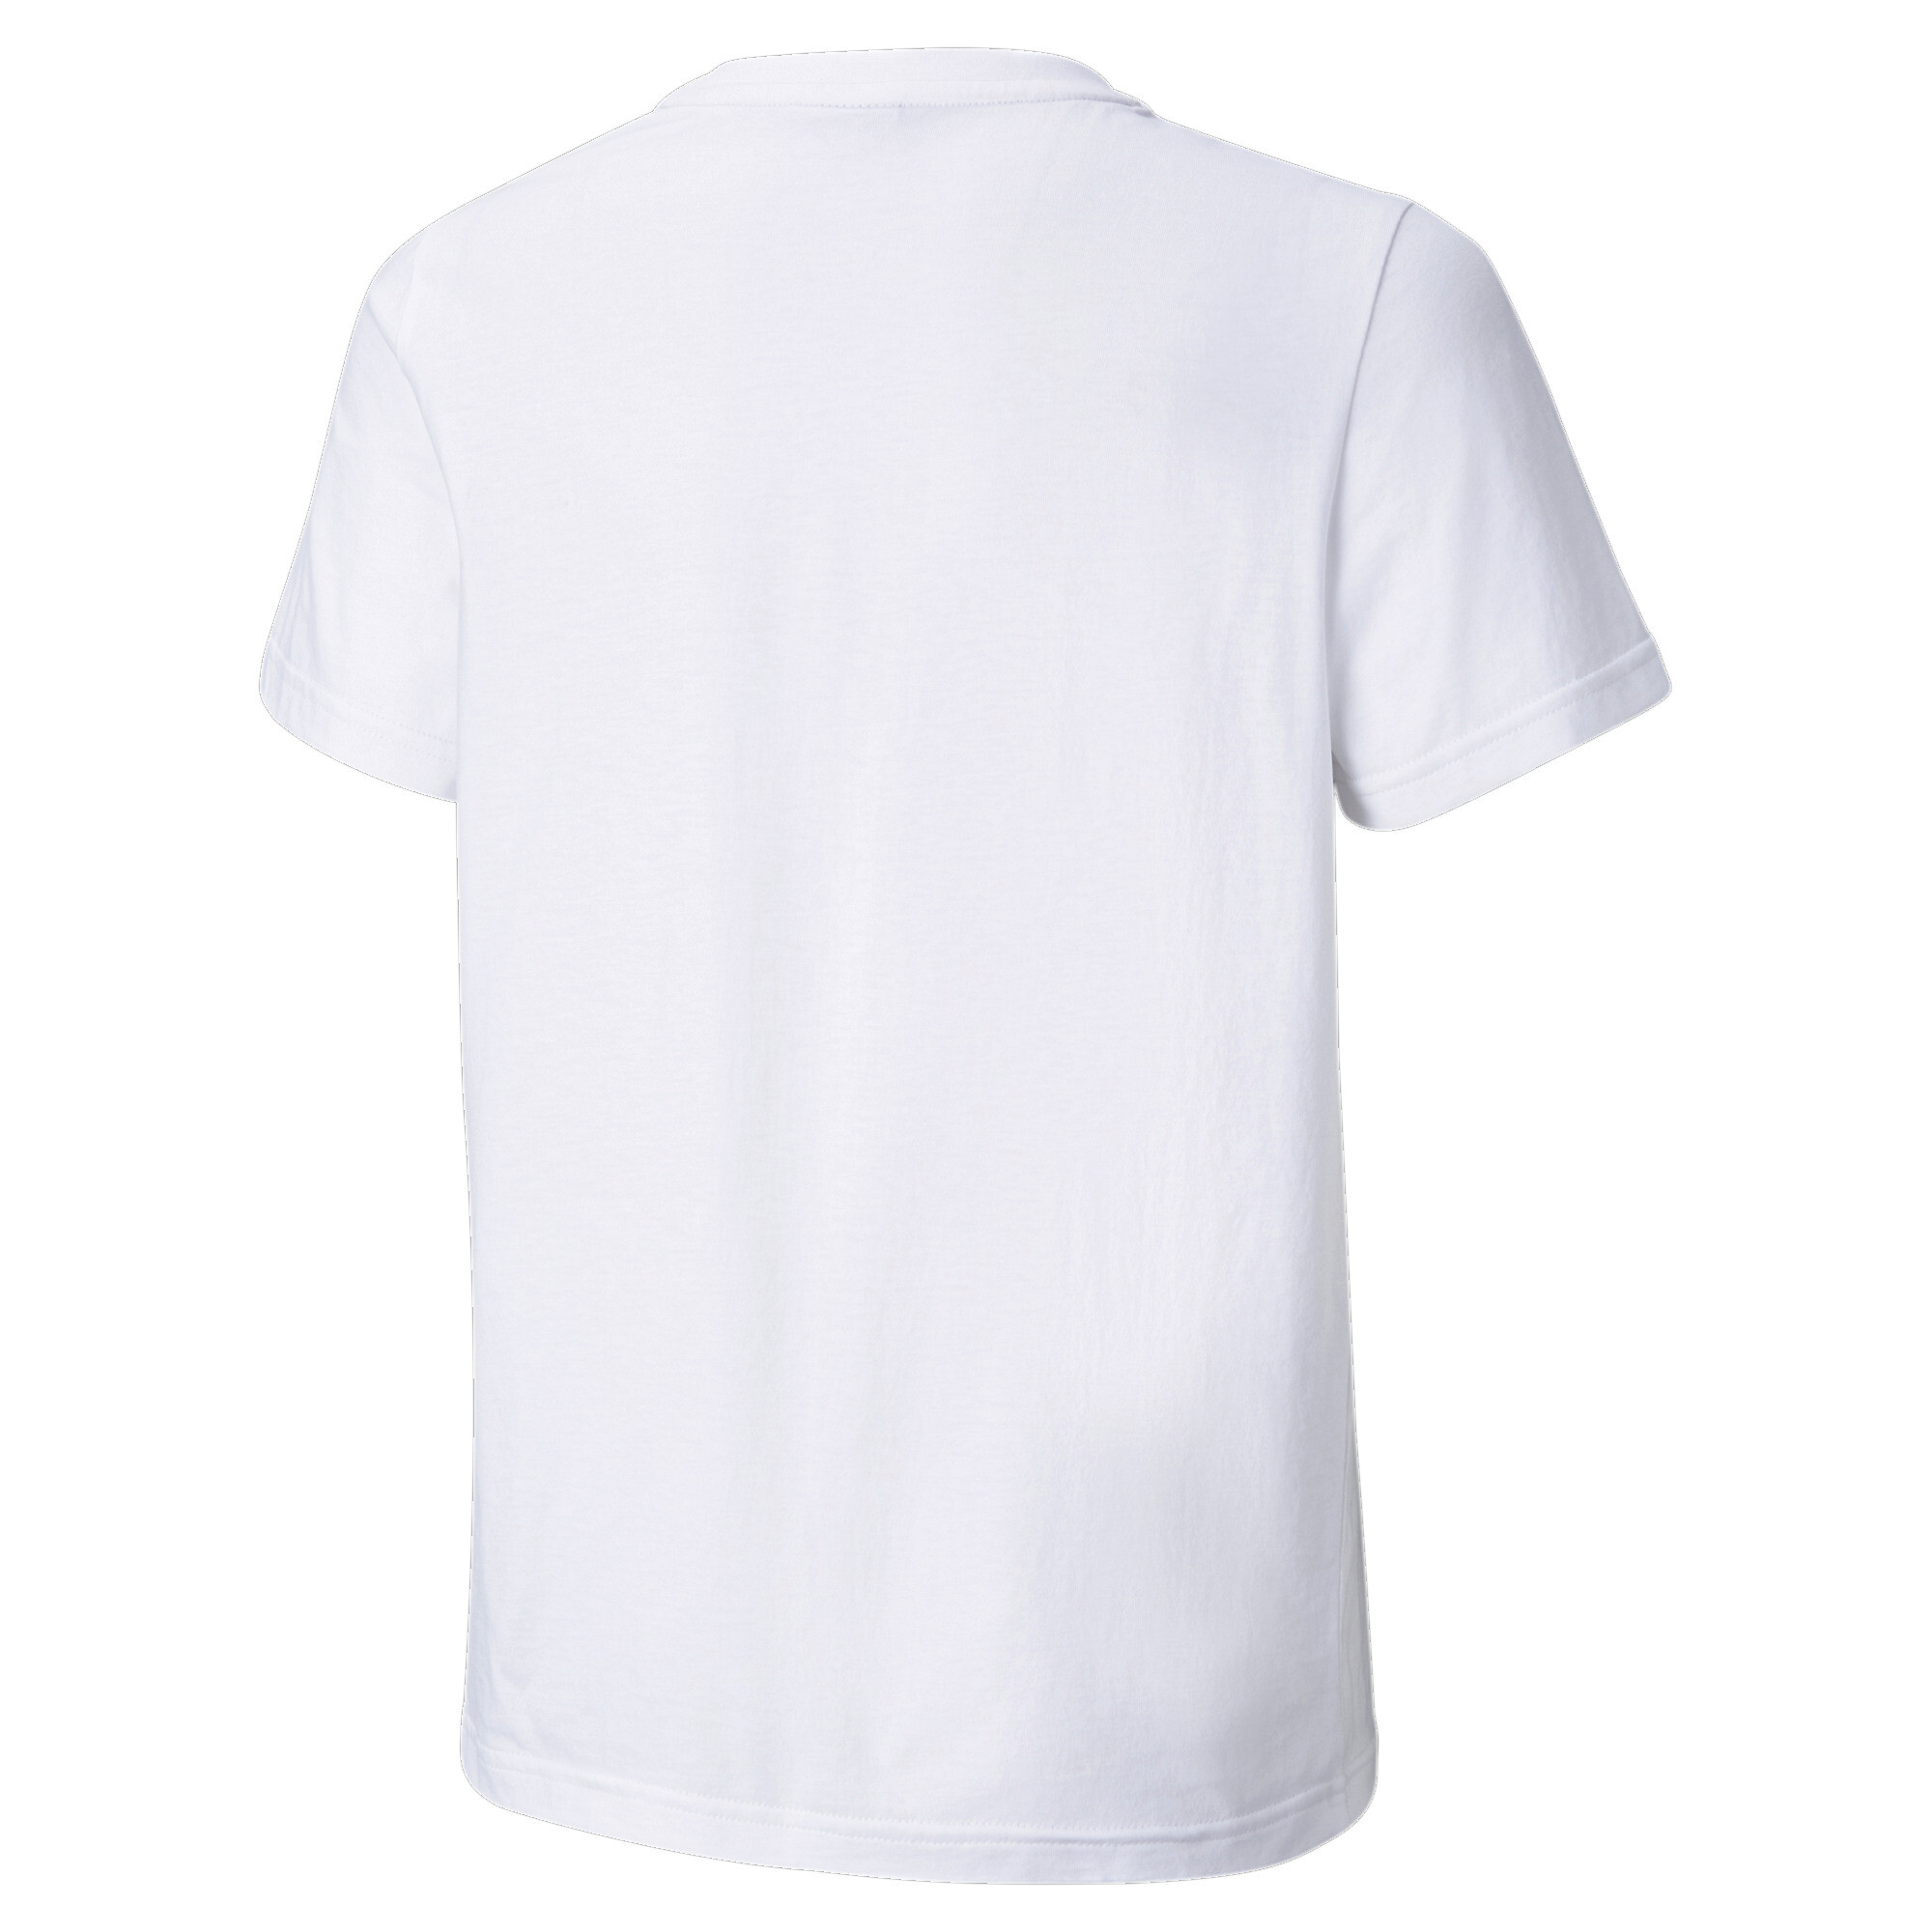 PUMA Classics B T-Shirt In White, Size 9-10 Youth